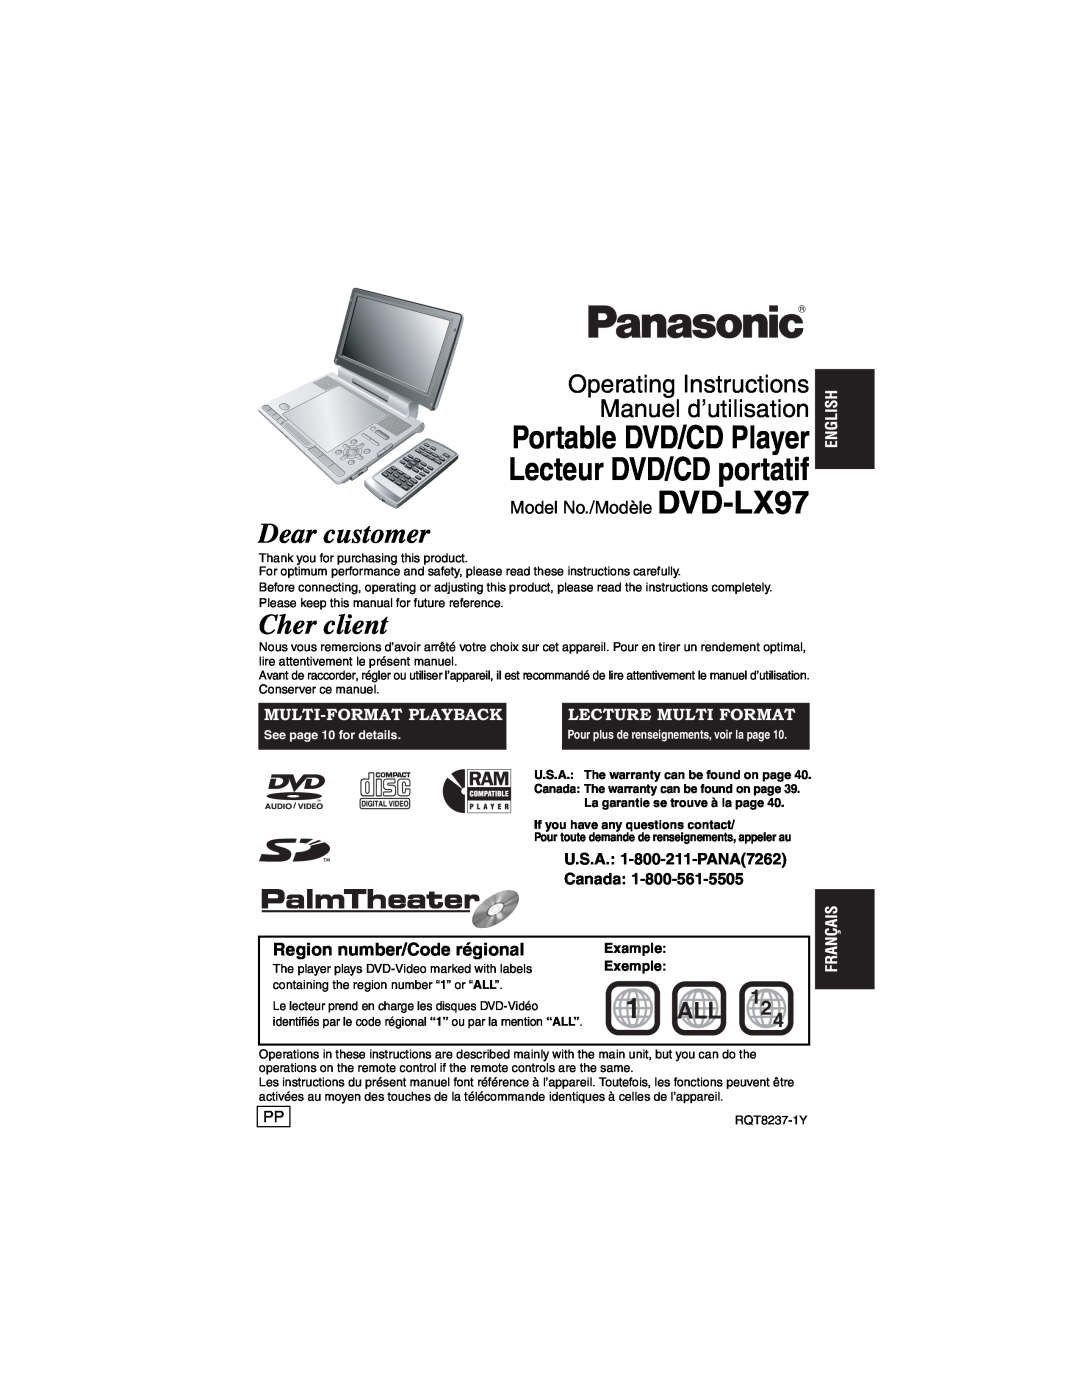 Panasonic DVD-LX97 manuel dutilisation Portable DVD/CD Player Lecteur DVD/CD portatif, Dear customer, Cher client, Canada 